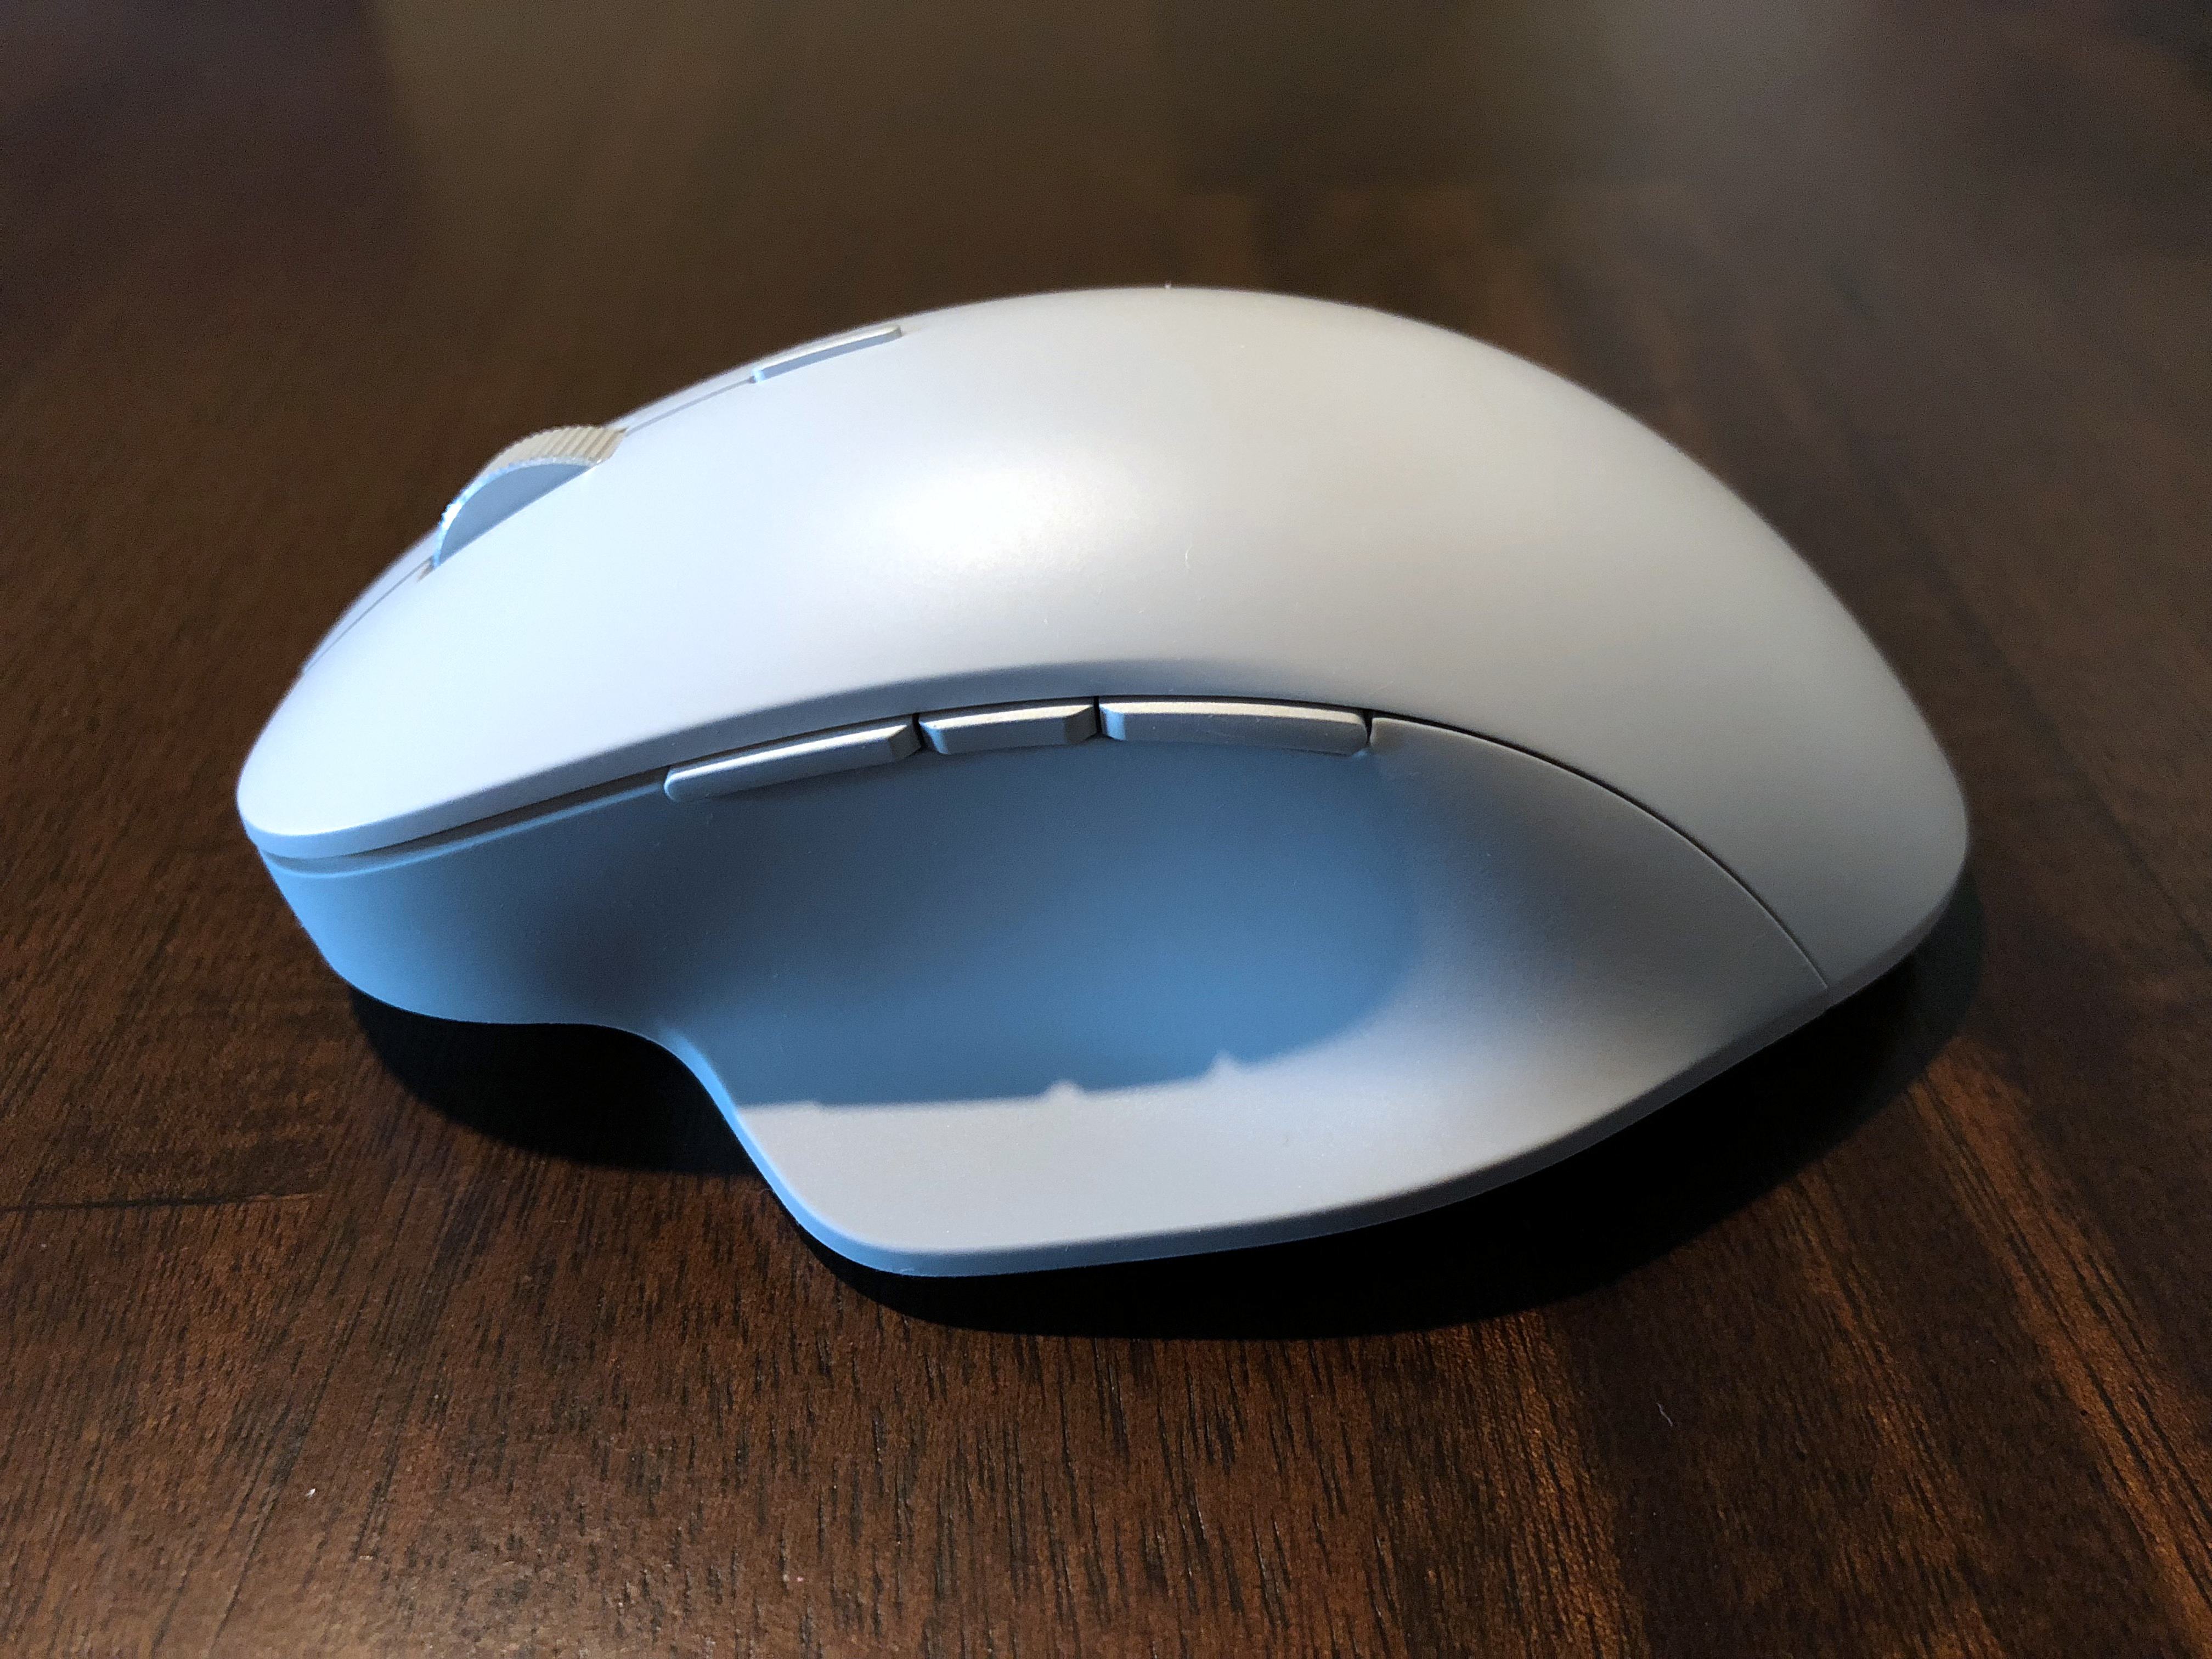 microsoft wireless mouse 1000 compatibility